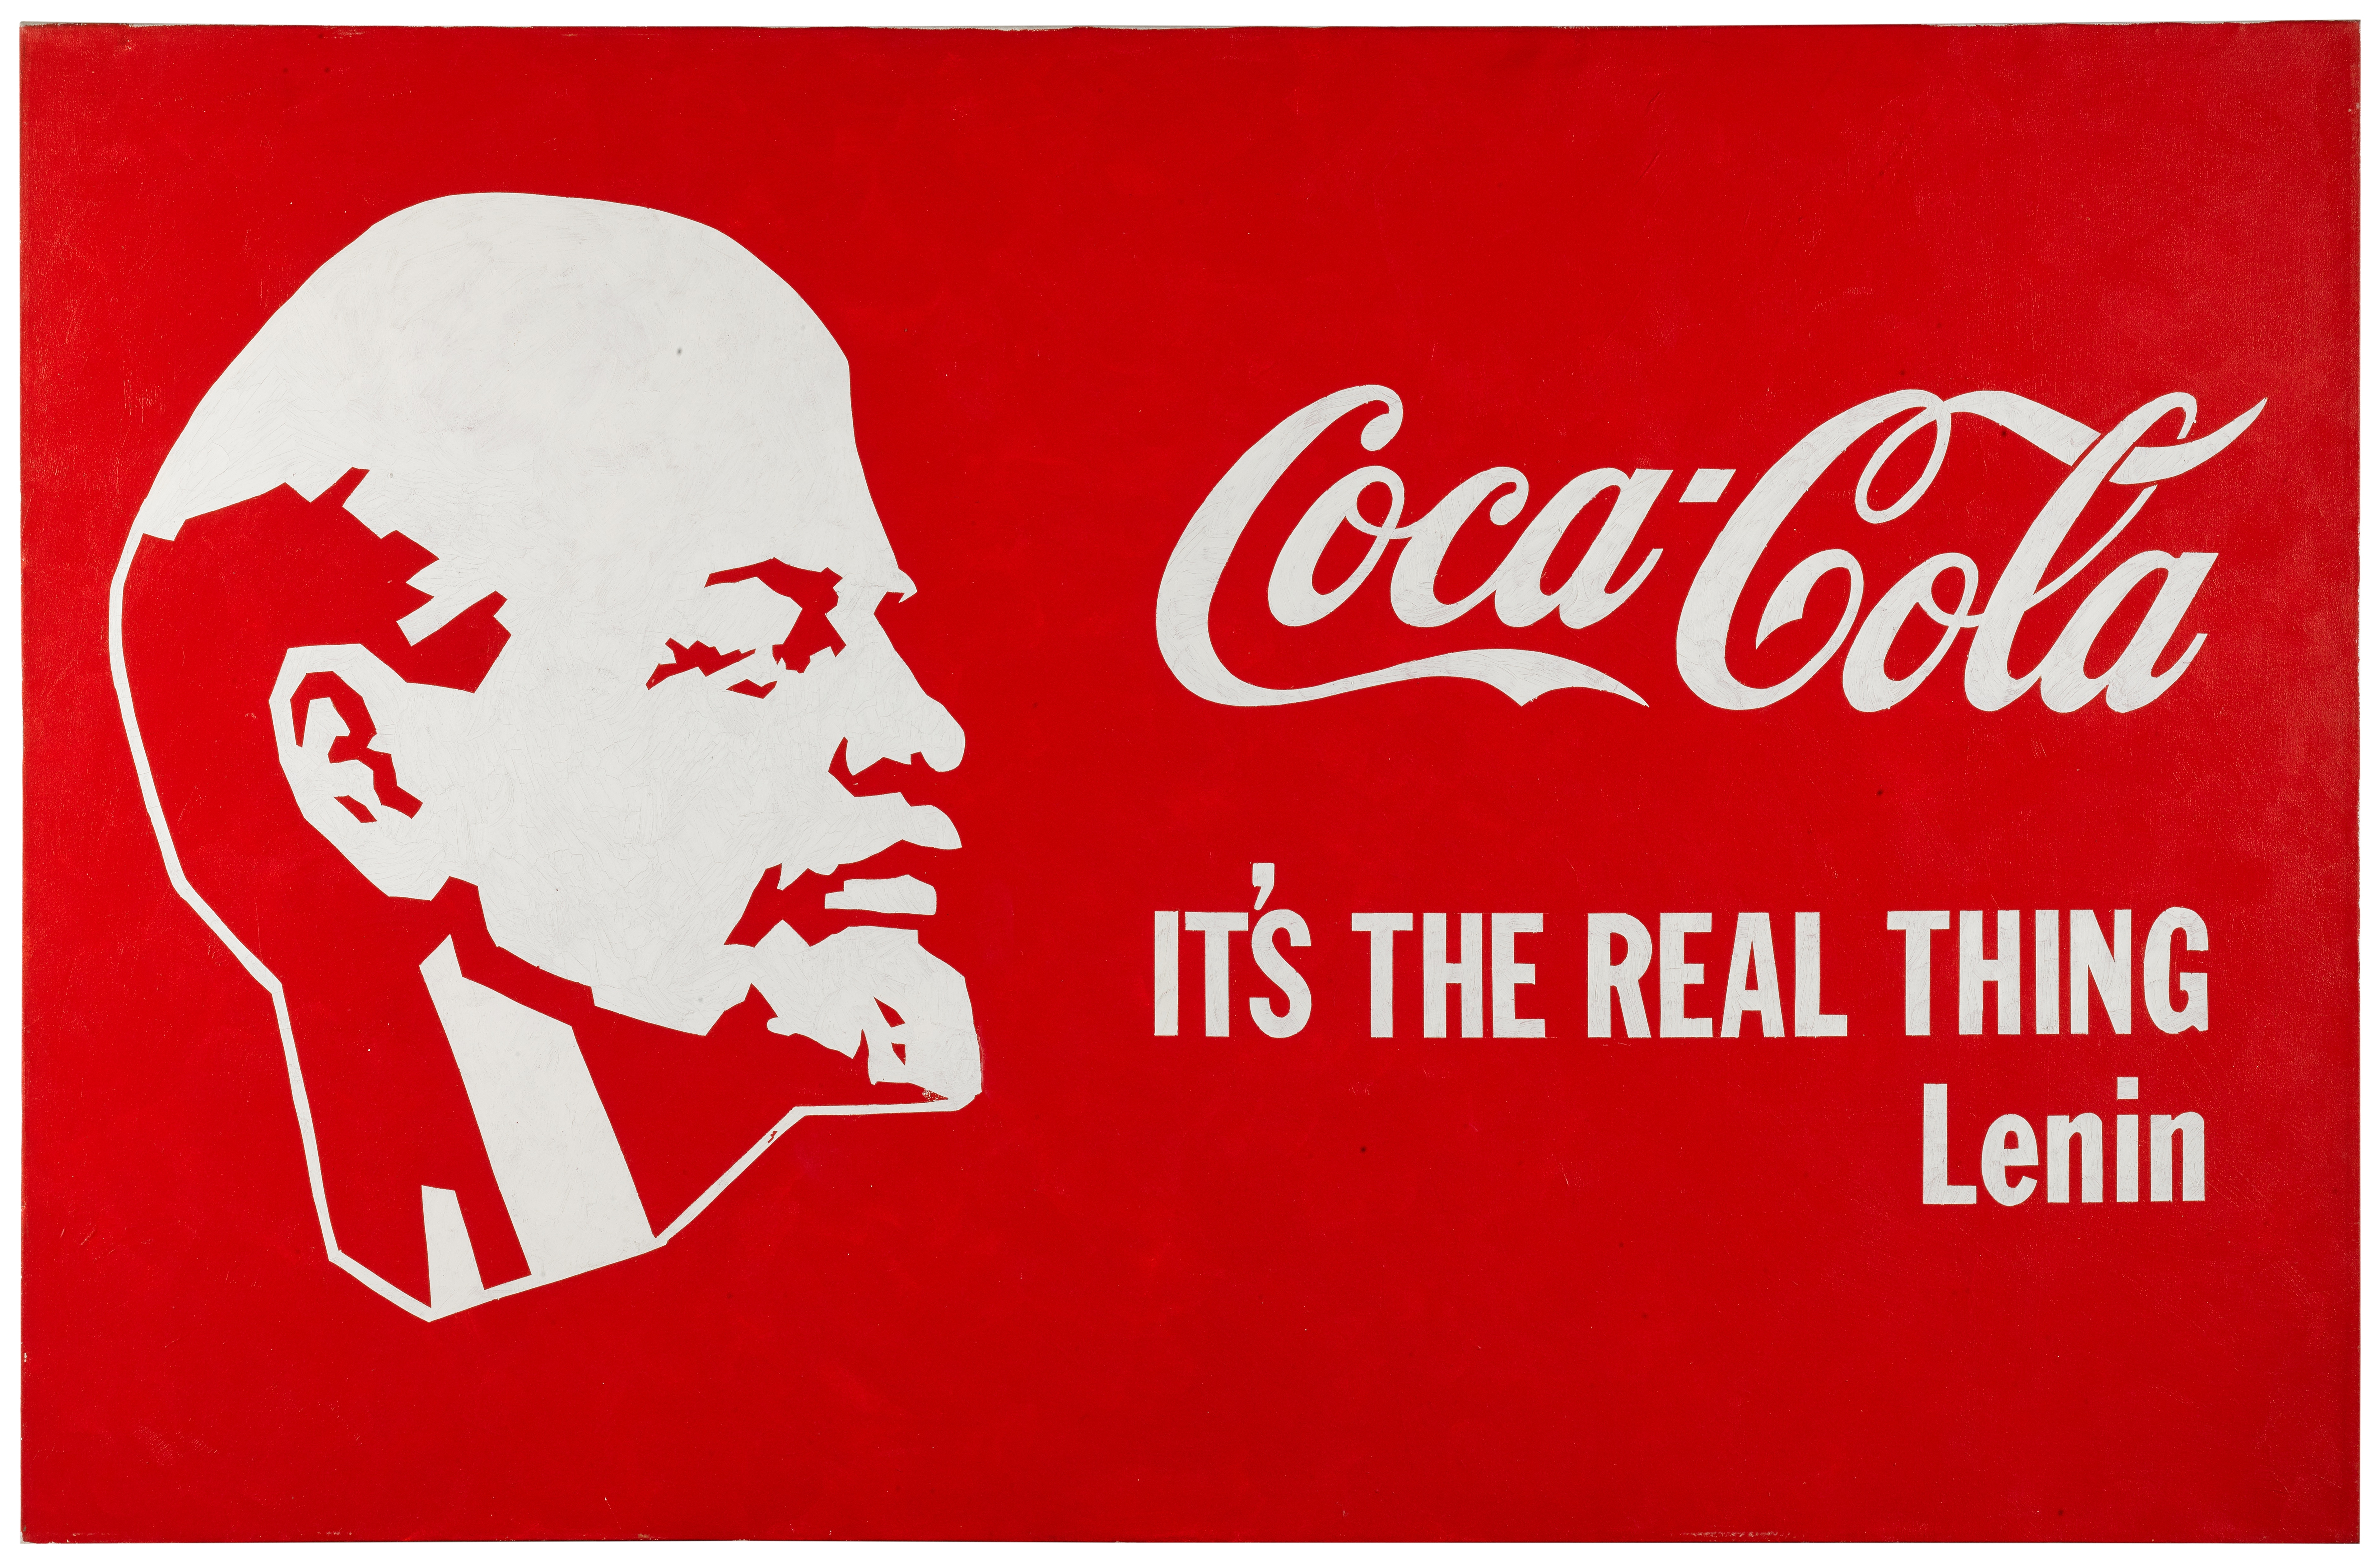 Lenin-Coca-Cola, Symbols of the Century by Alexander Kosolapov